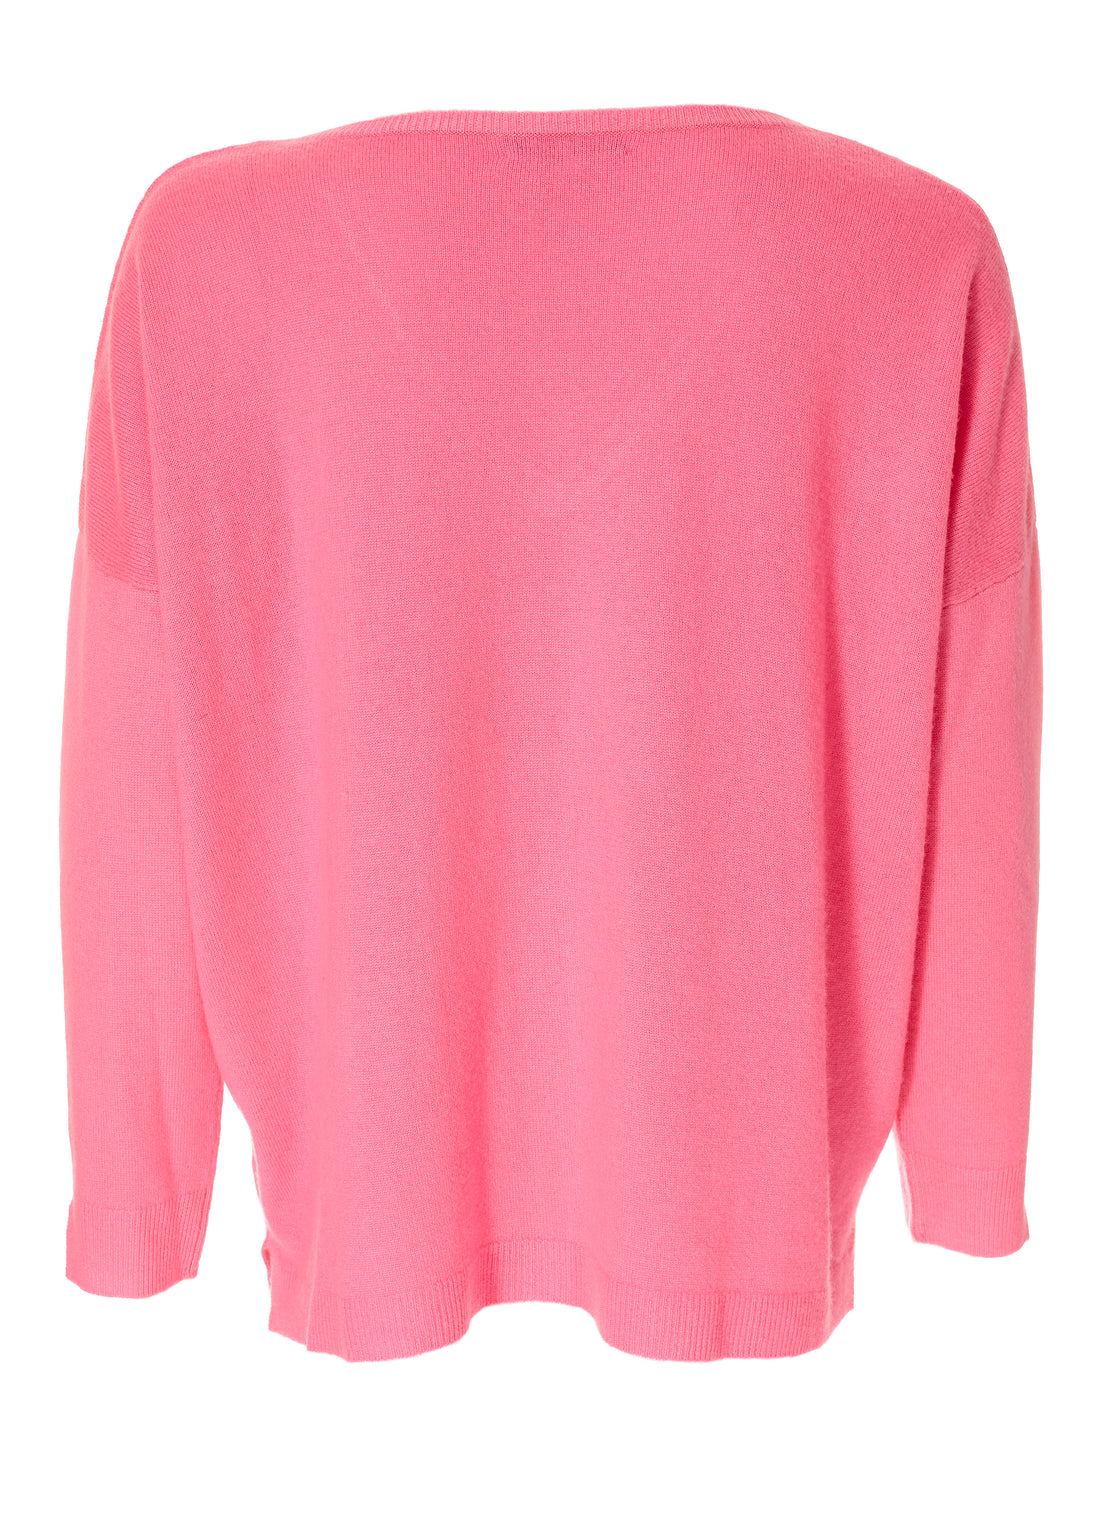 Long Pink "Moon" Cashmere V Neck Sweater - Jessimara